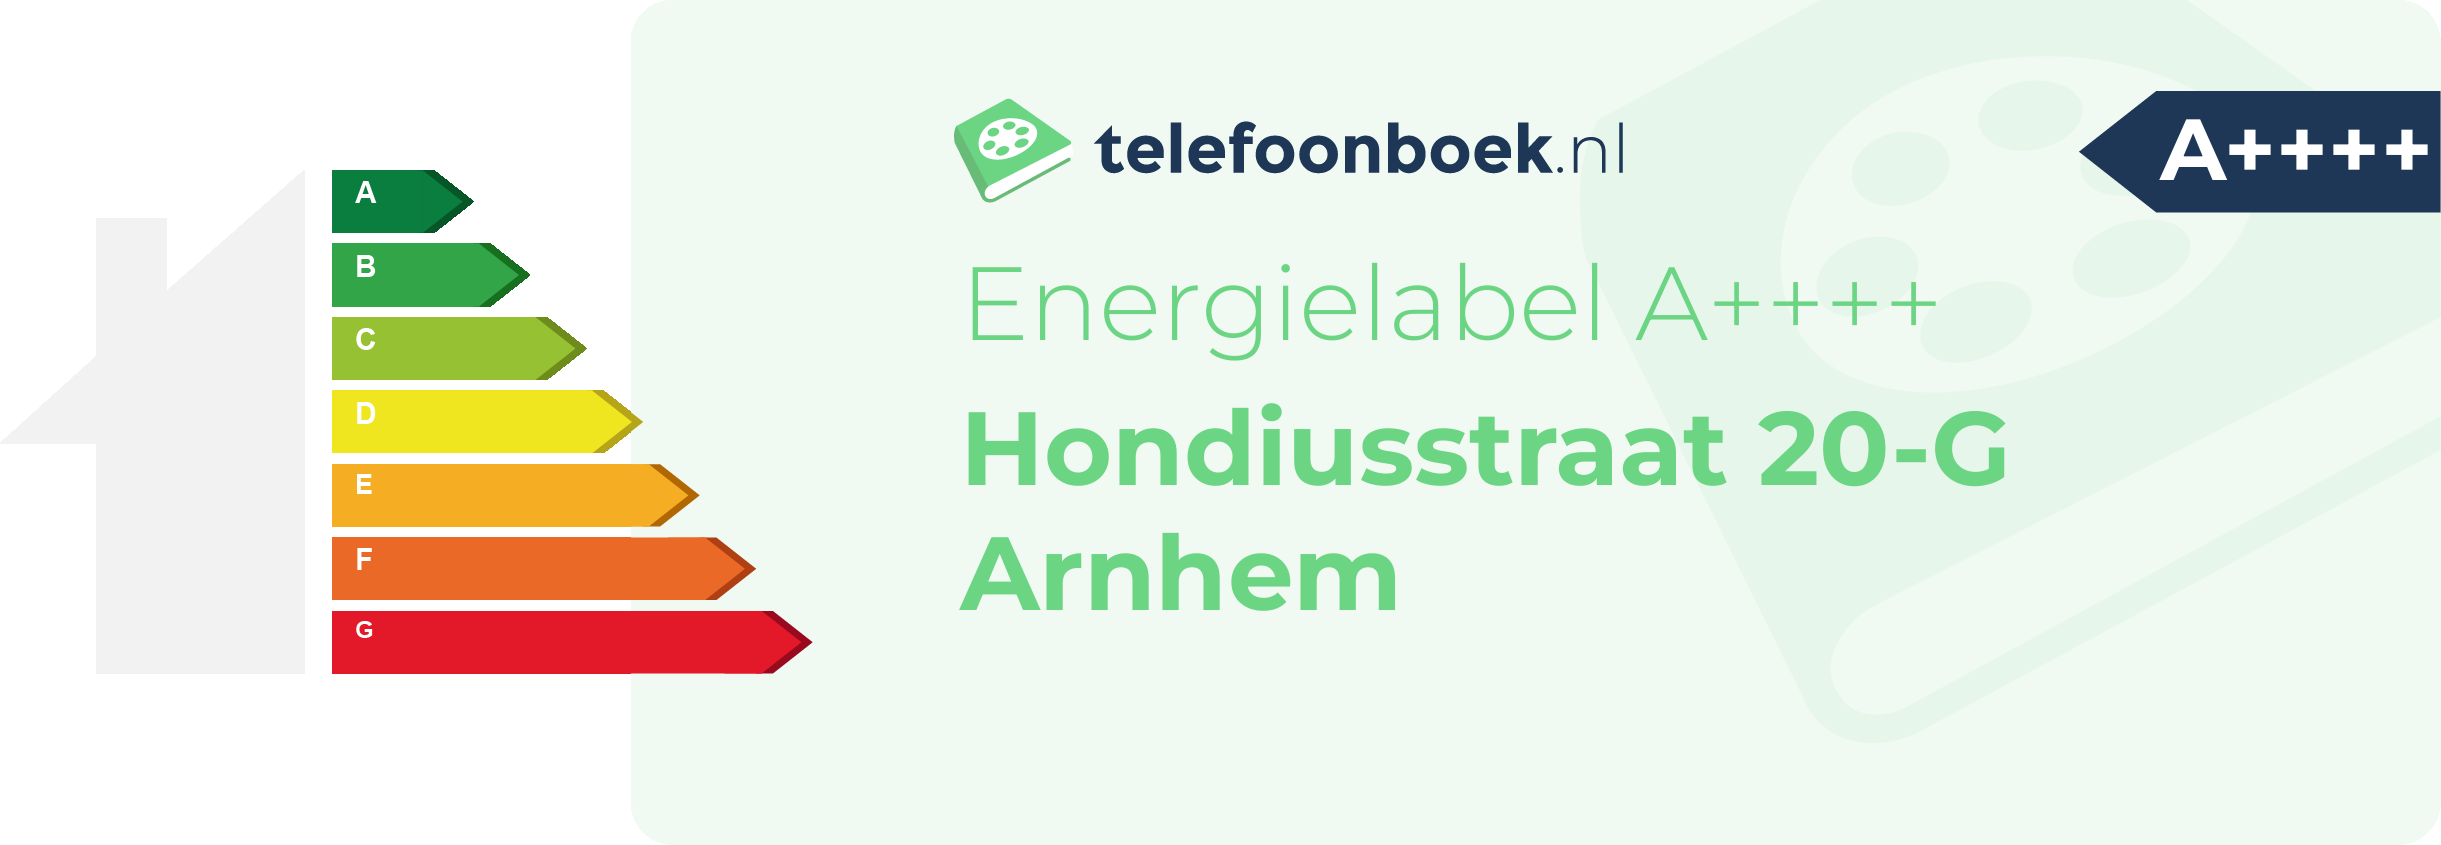 Energielabel Hondiusstraat 20-G Arnhem